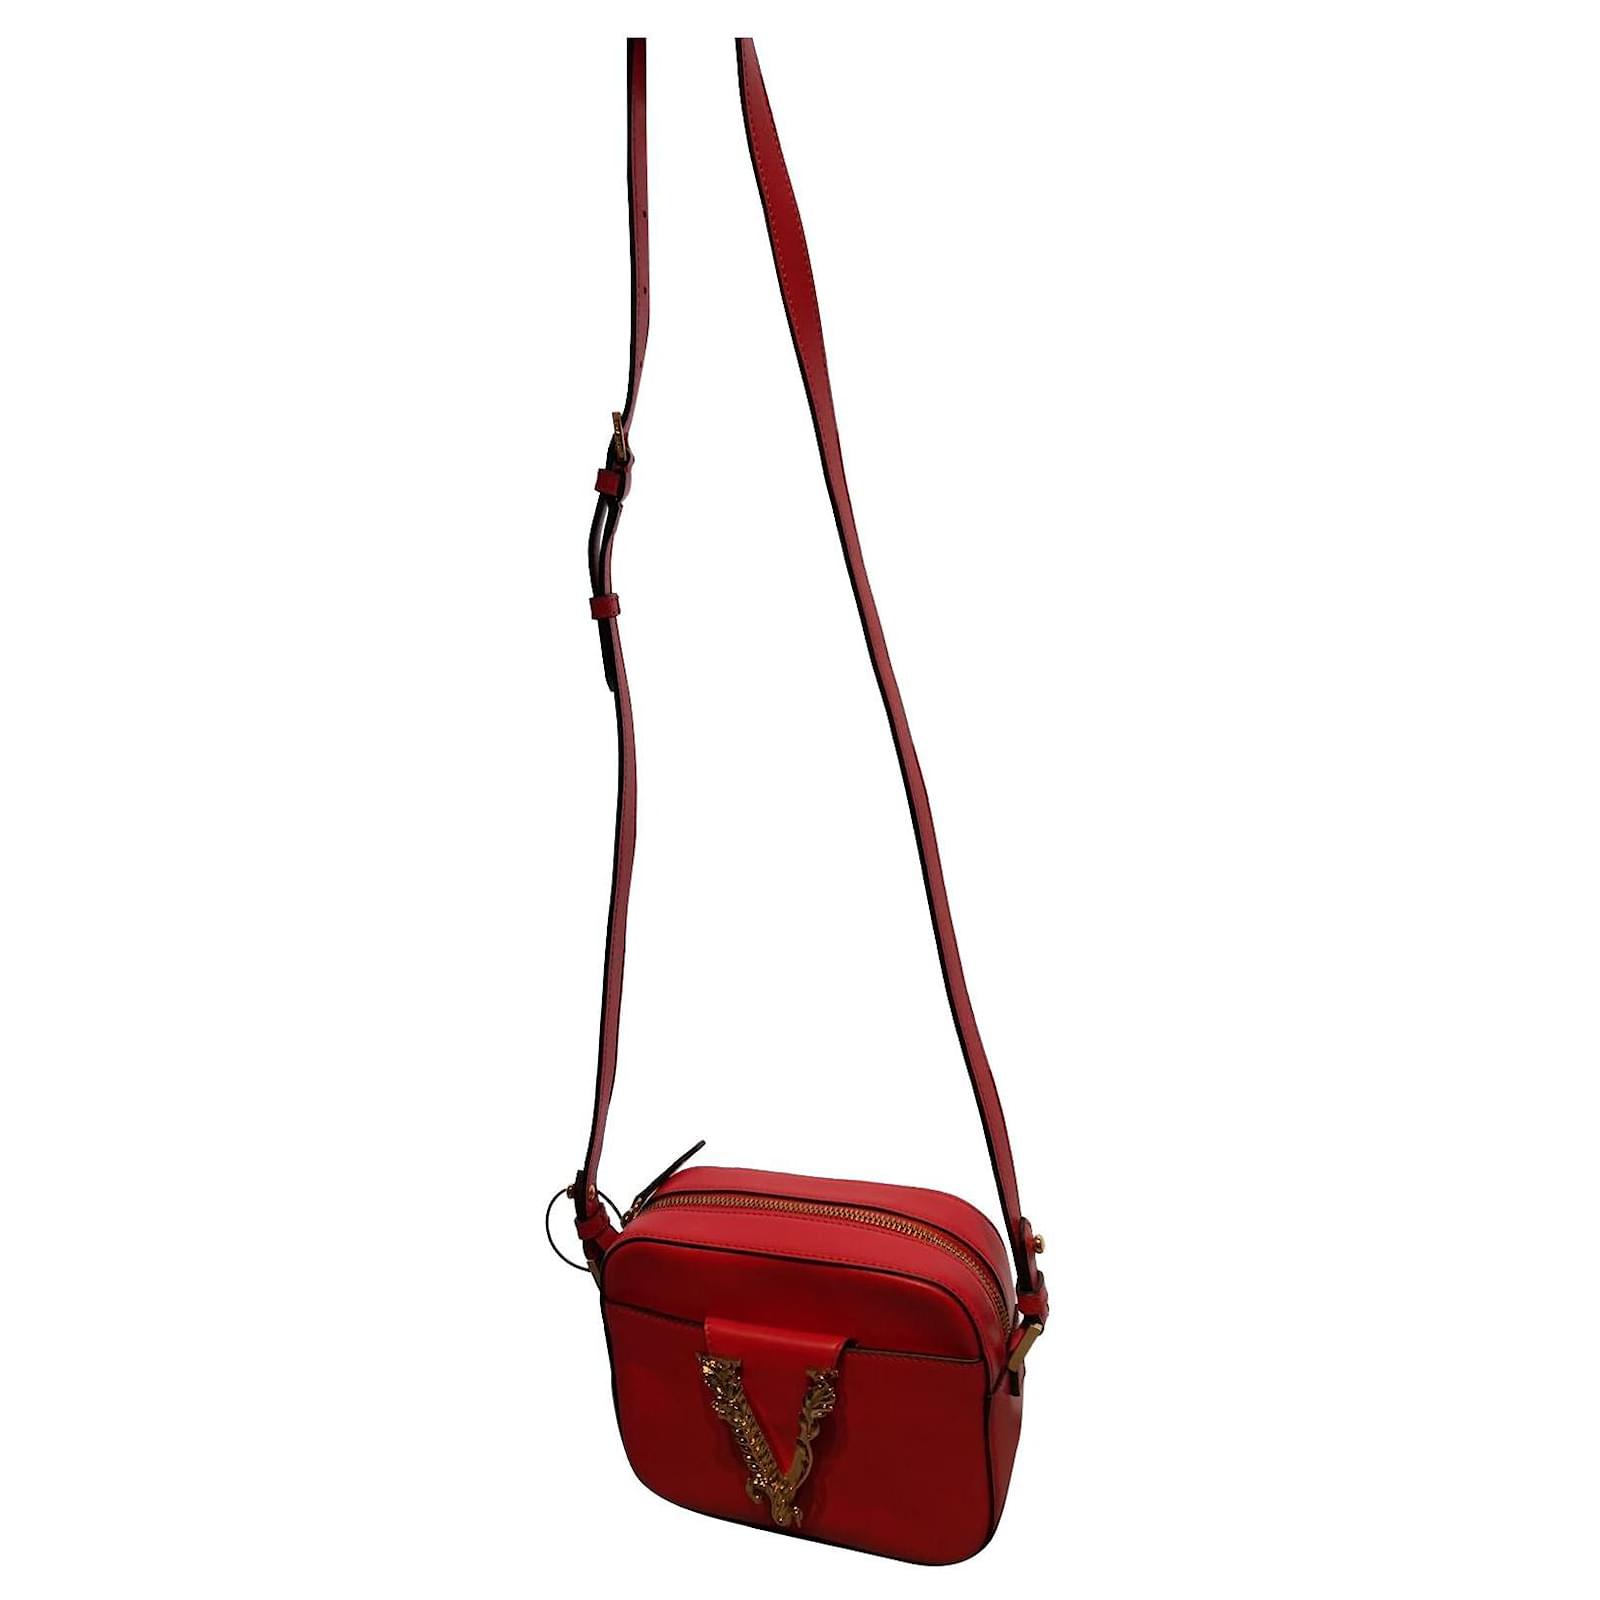 Versace Virtus camera bag